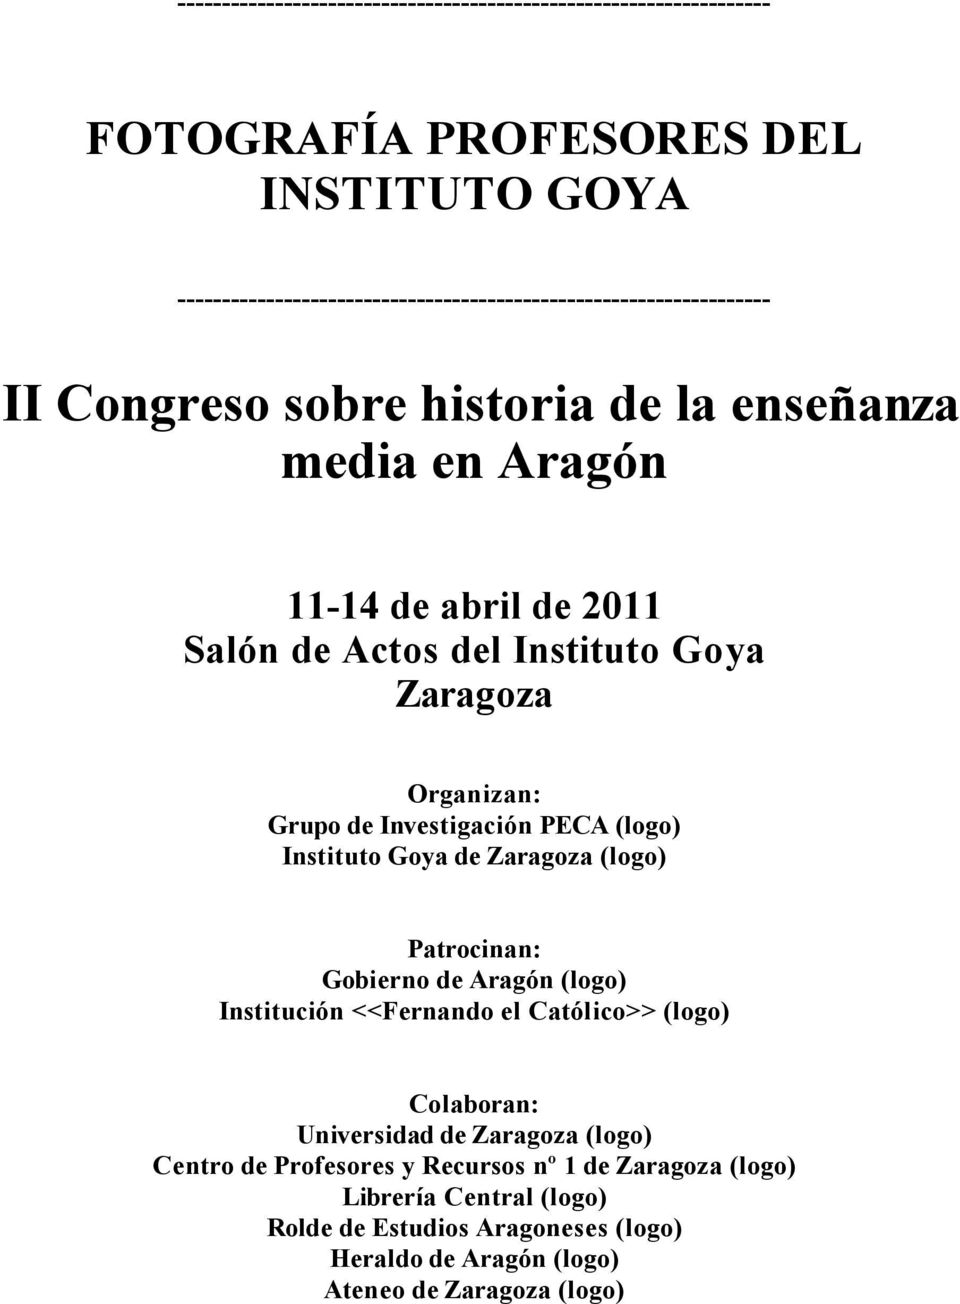 del Instituto Goya Zaragoza Organizan: Grupo de Investigación PECA (logo) Instituto Goya de Zaragoza (logo) Patrocinan: Gobierno de Aragón (logo) Institución